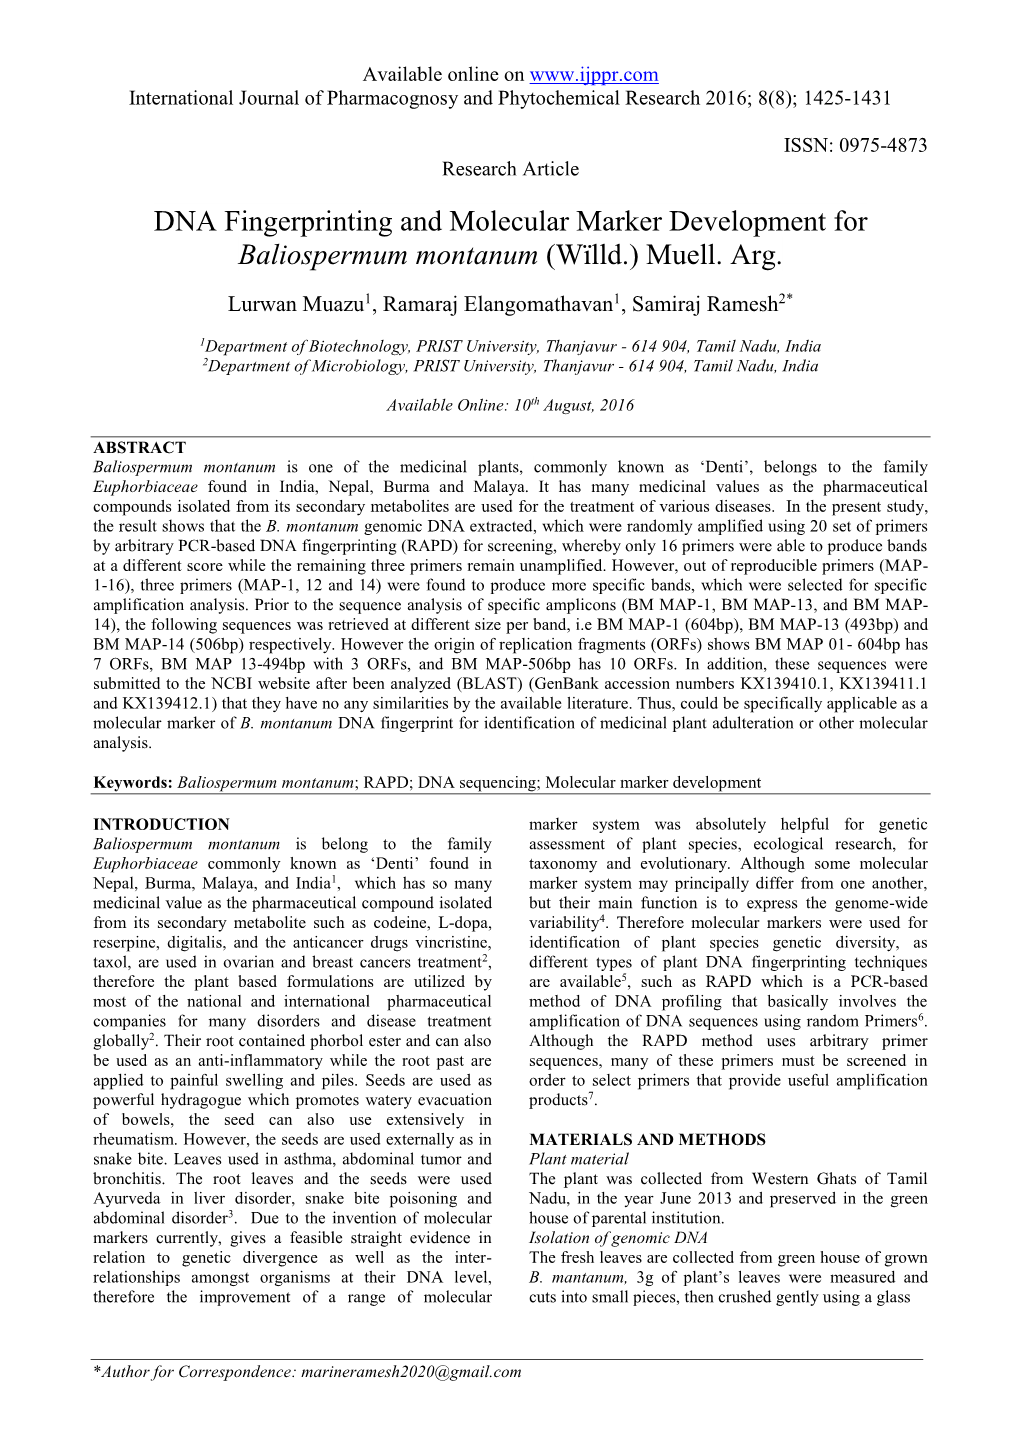 DNA Fingerprinting and Molecular Marker Development for Baliospermum Montanum (Wïlld.) Muell